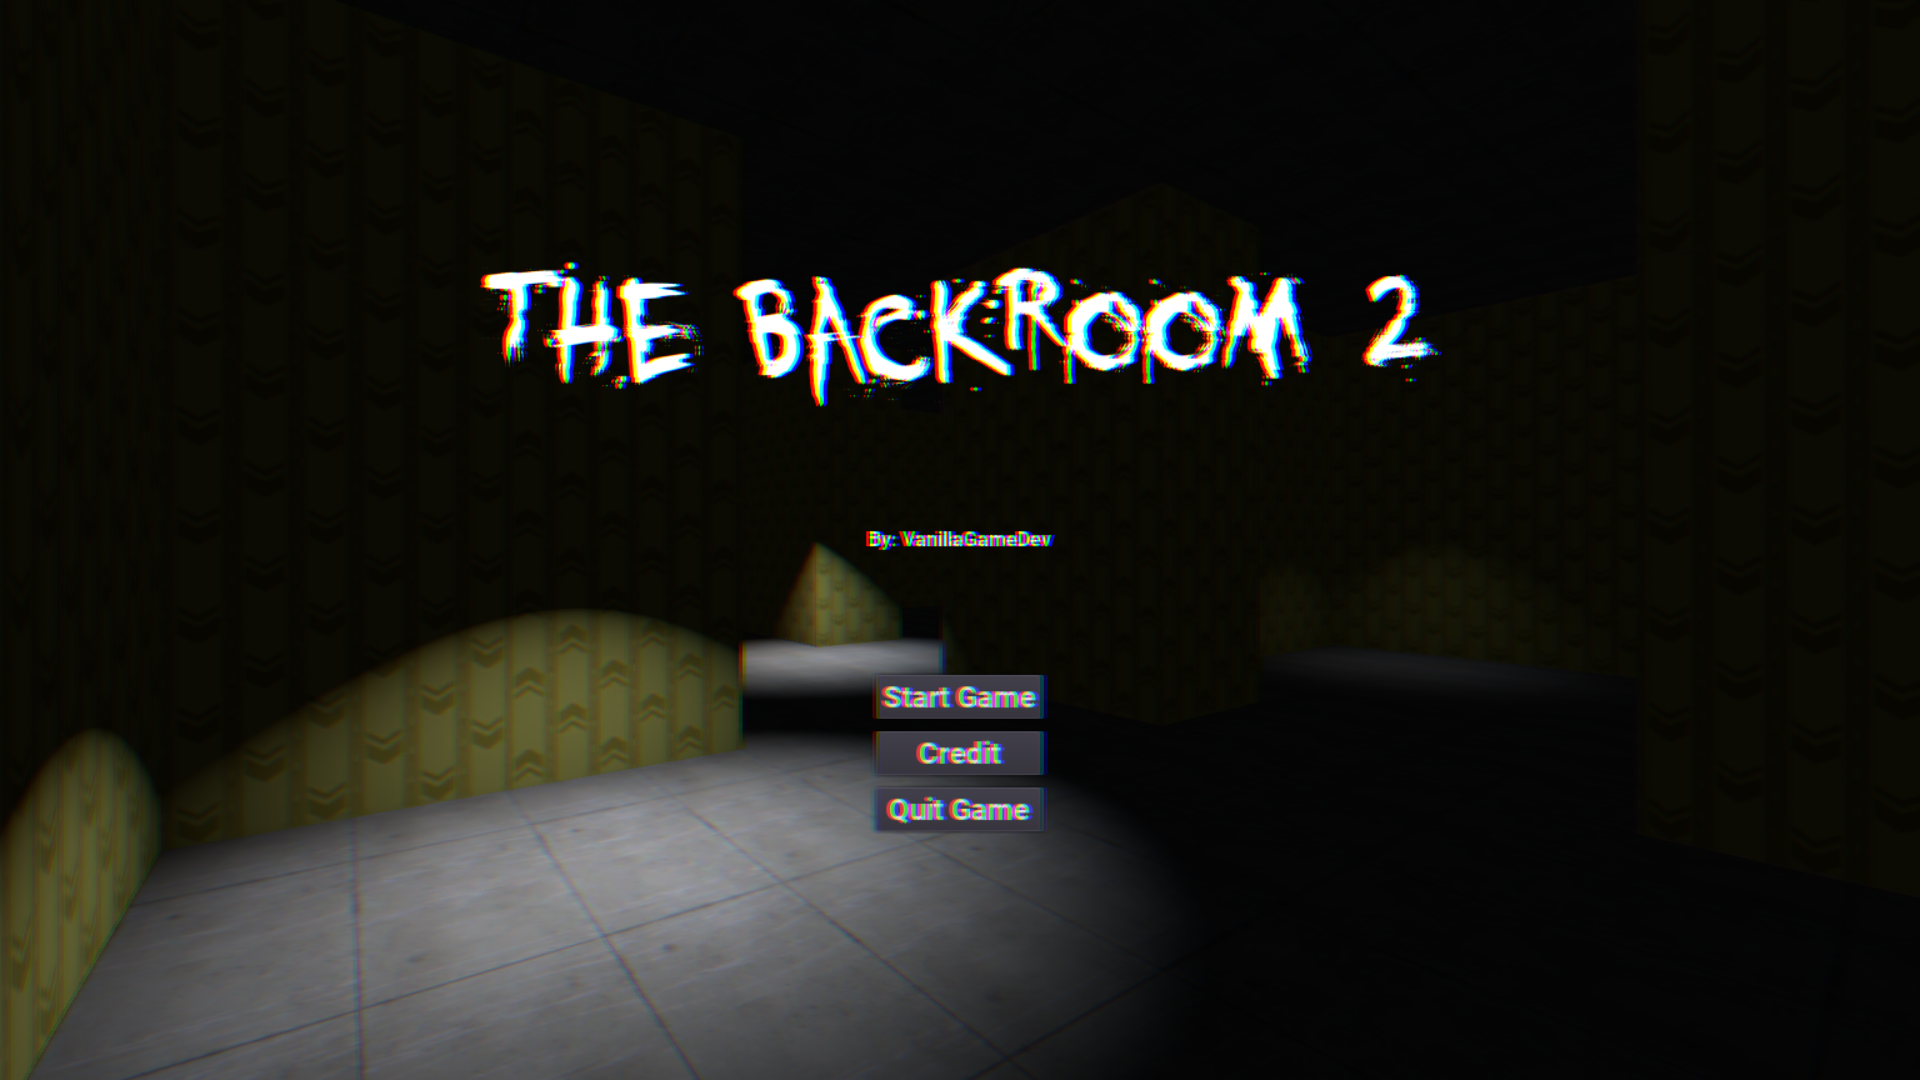 The Backroom 2